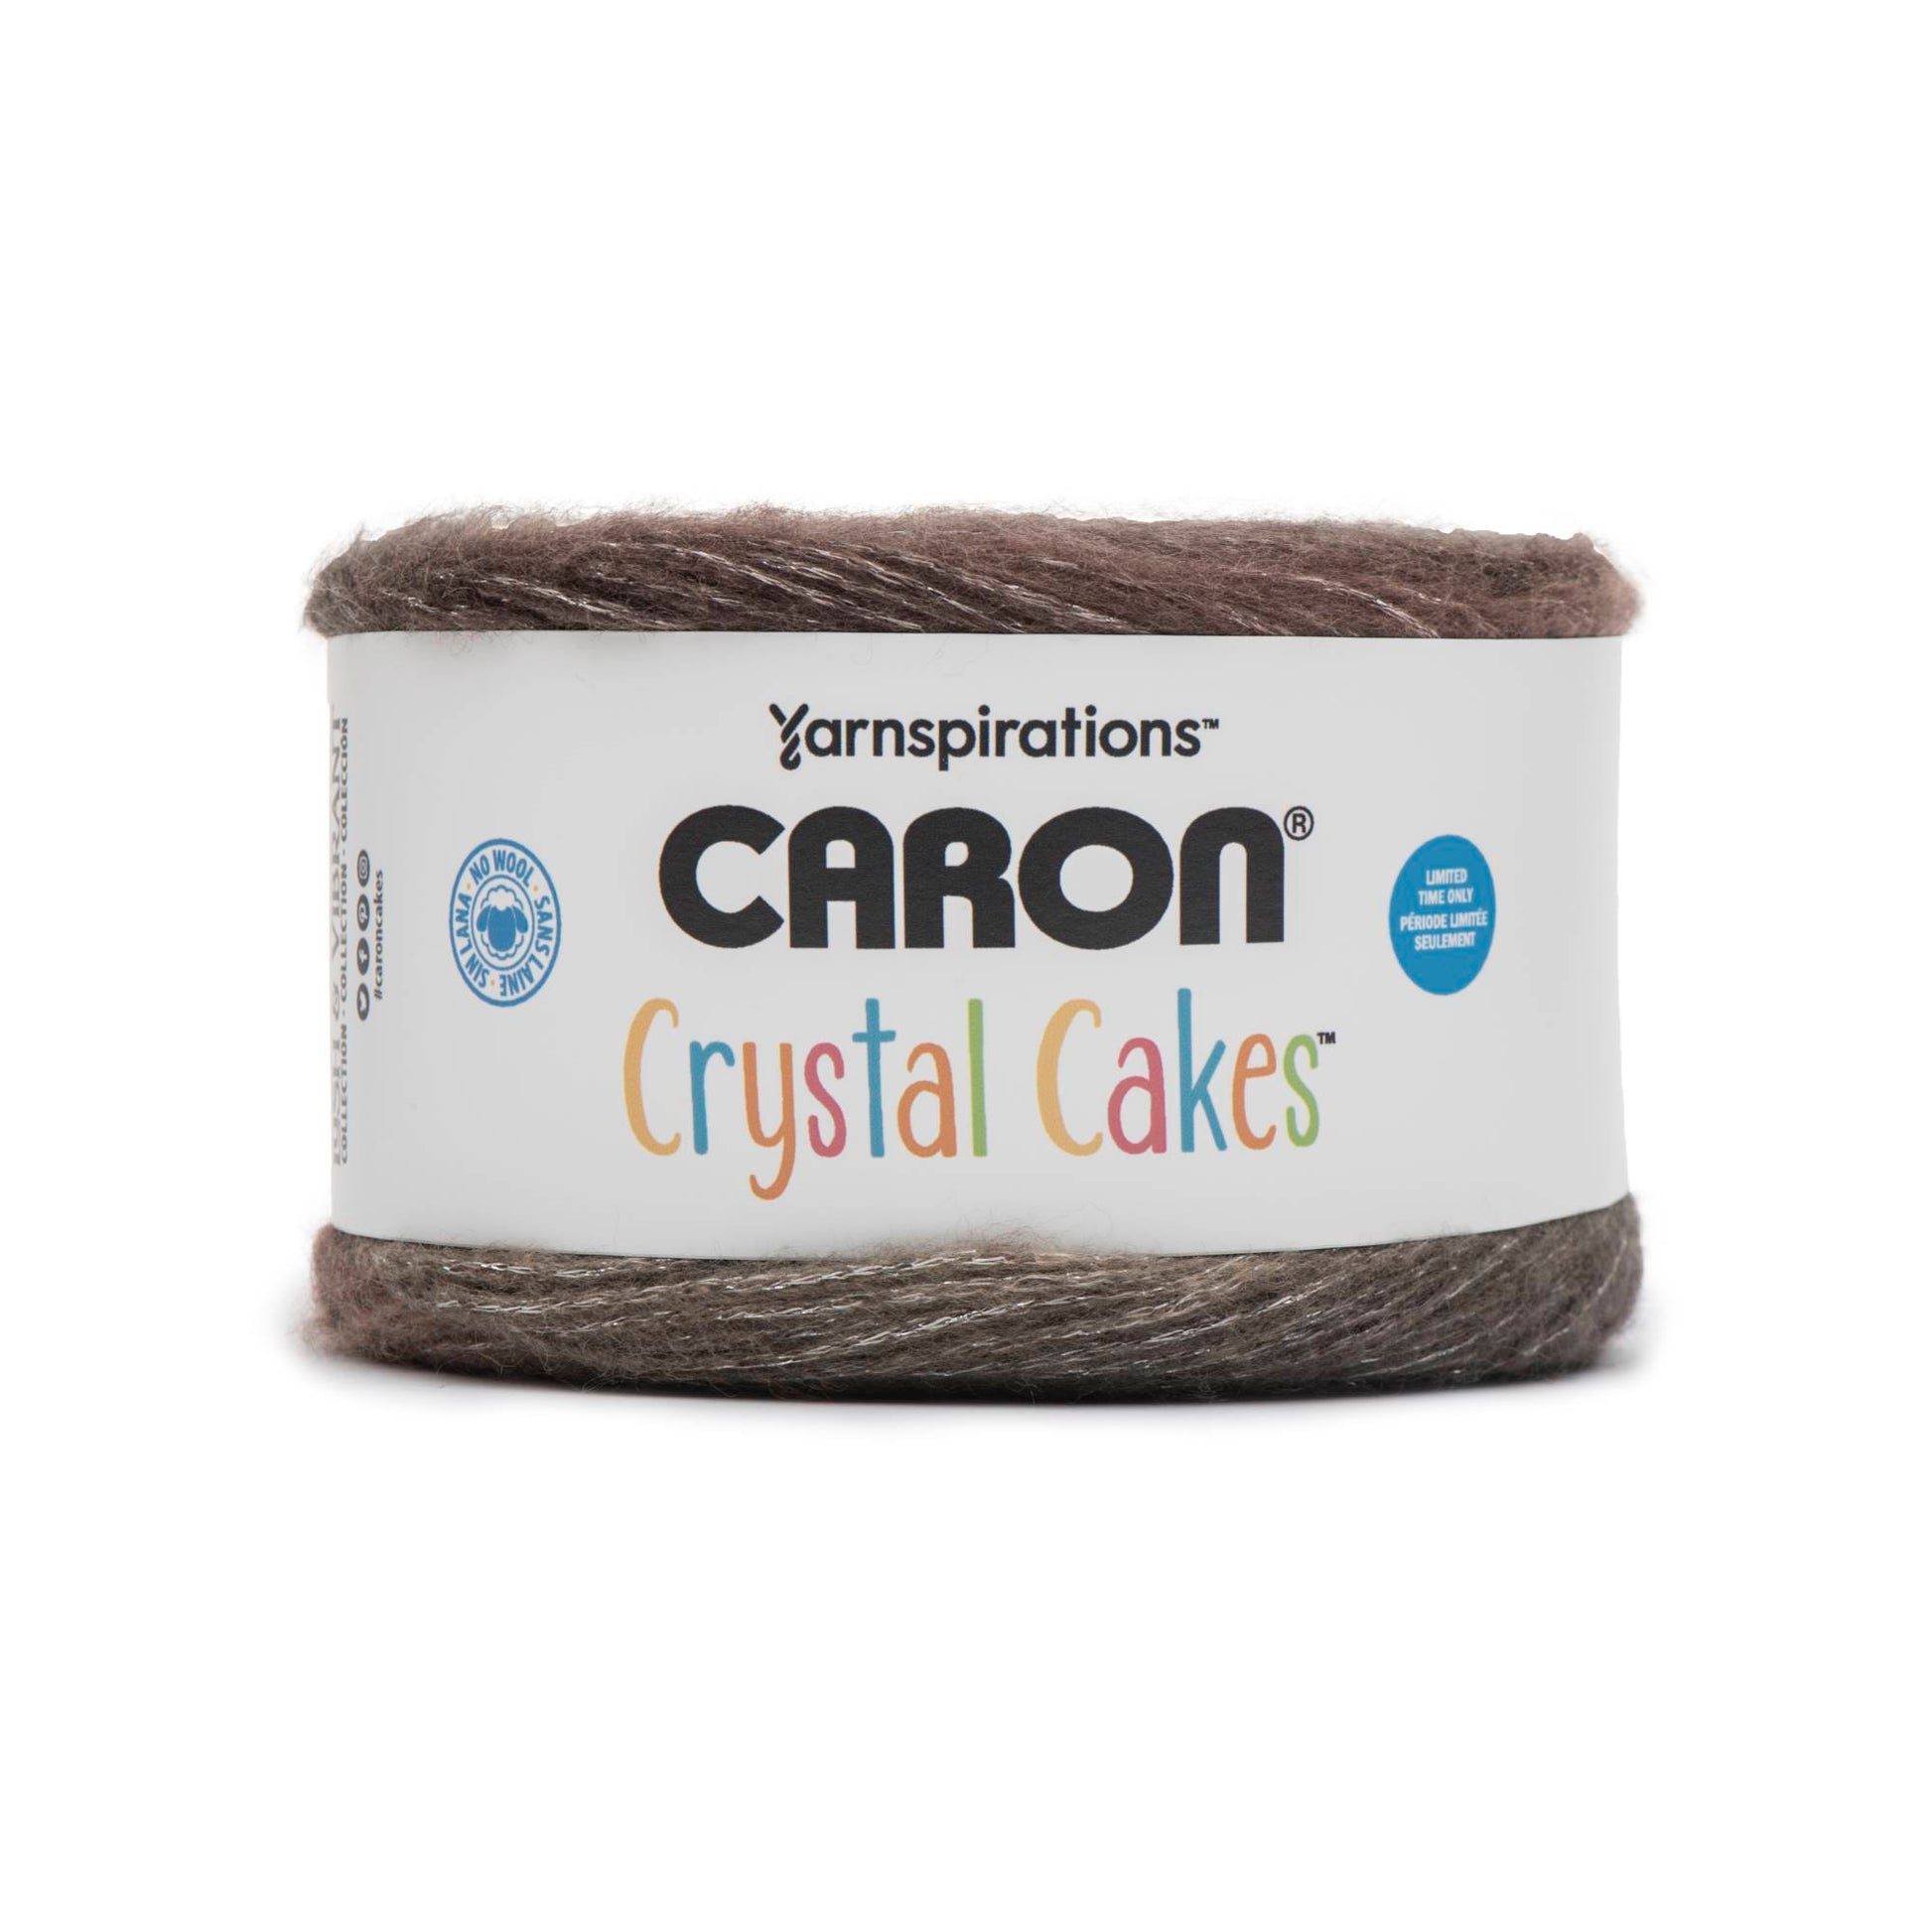 Caron Crystal Cakes Yarn (240g/8.5oz) - Discontinued shades